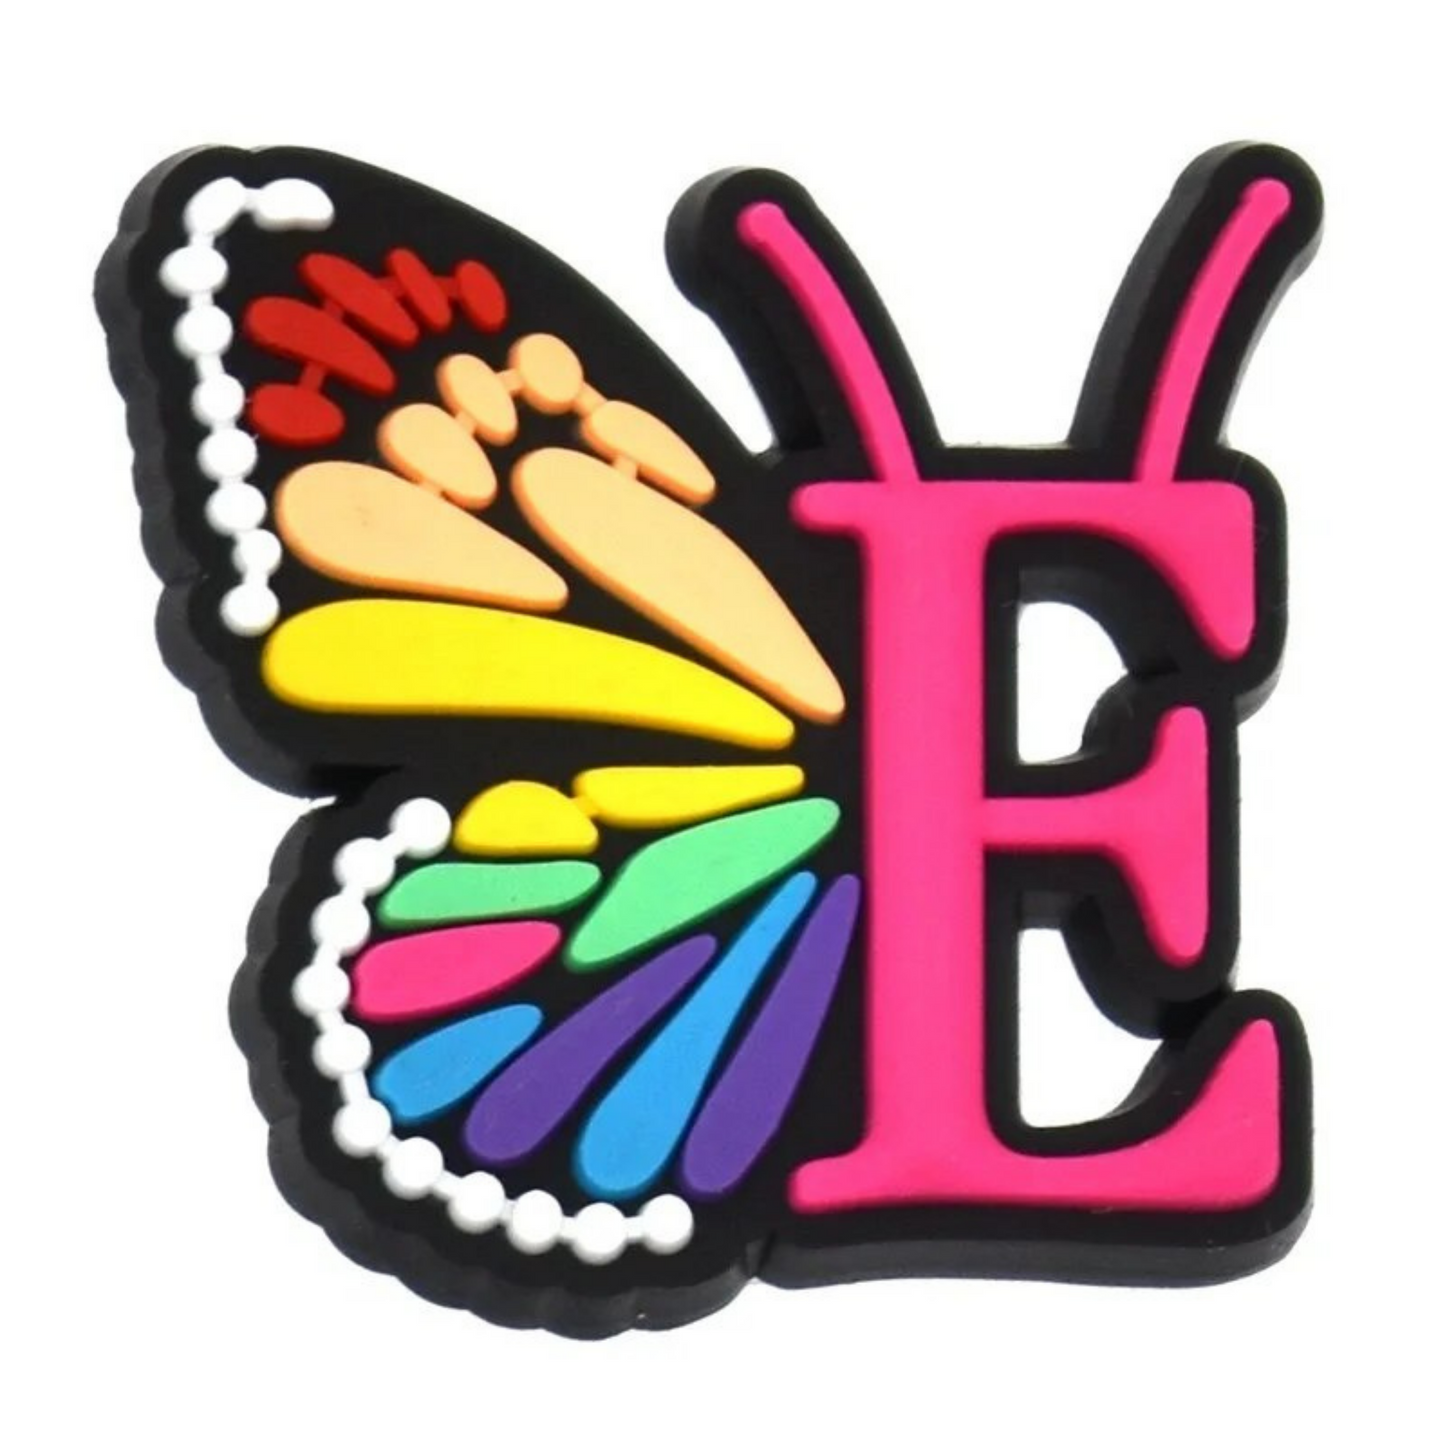 E - Butterfly